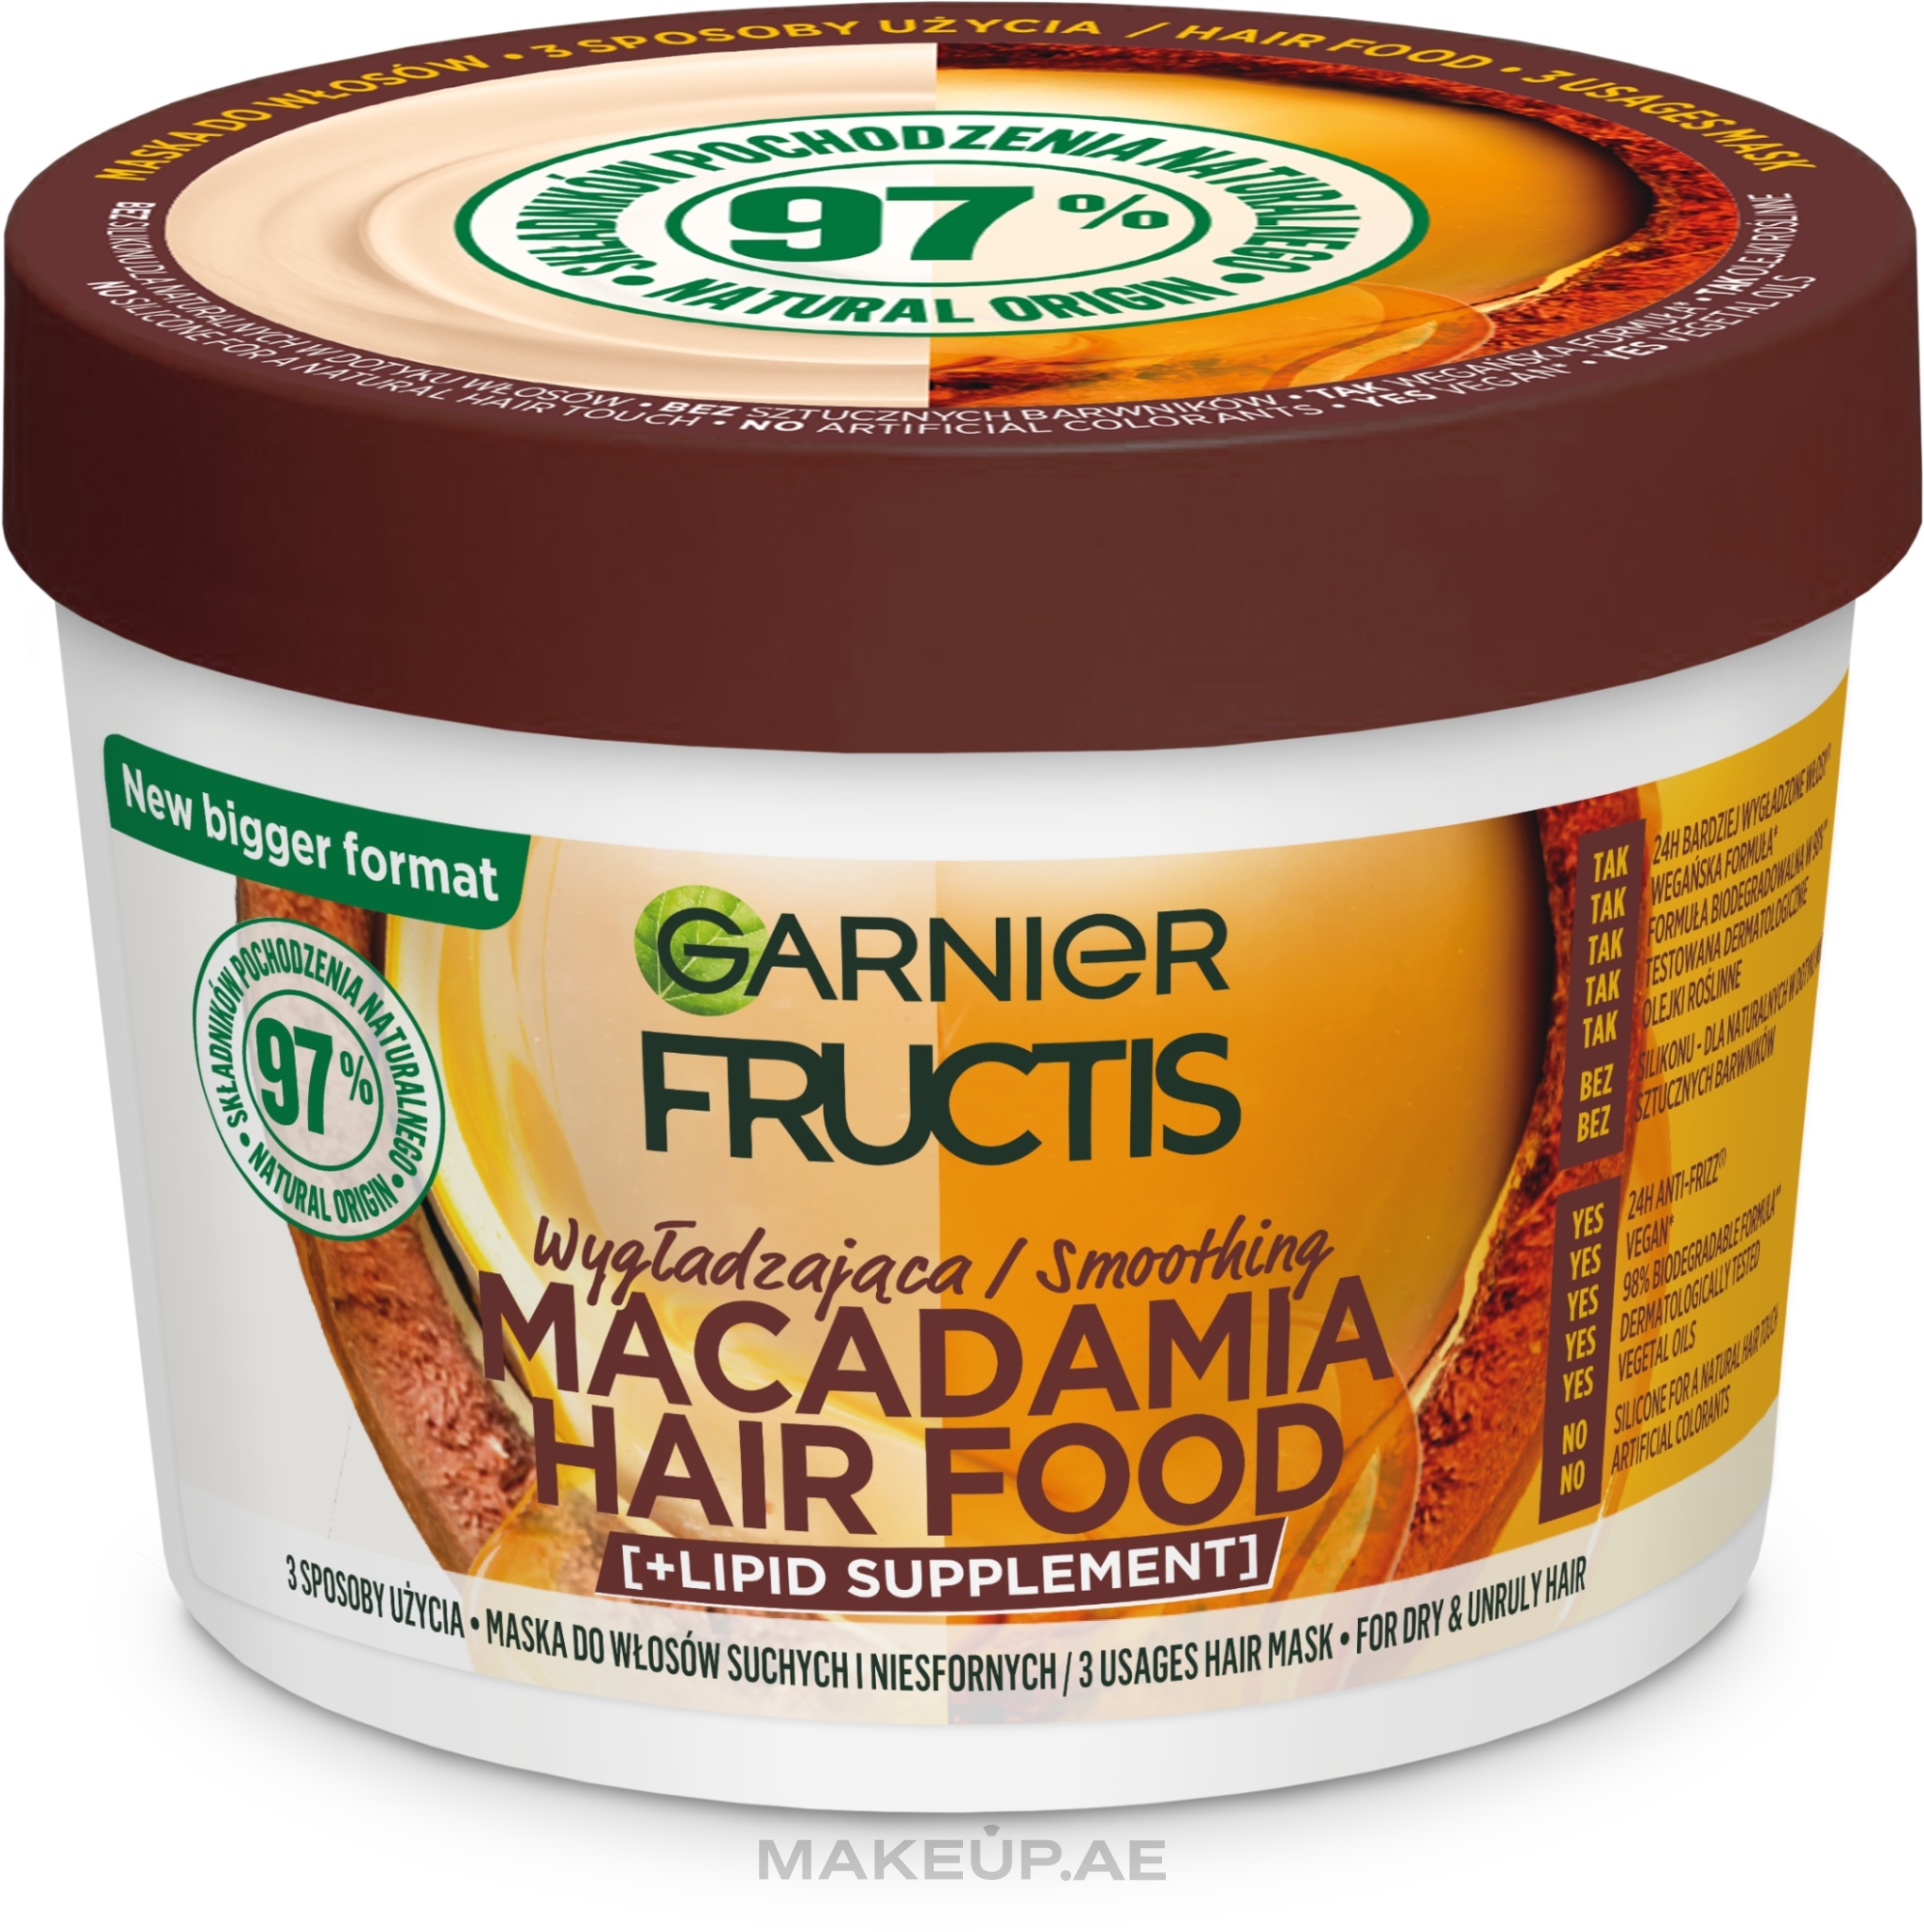 macadamia hair food szampon